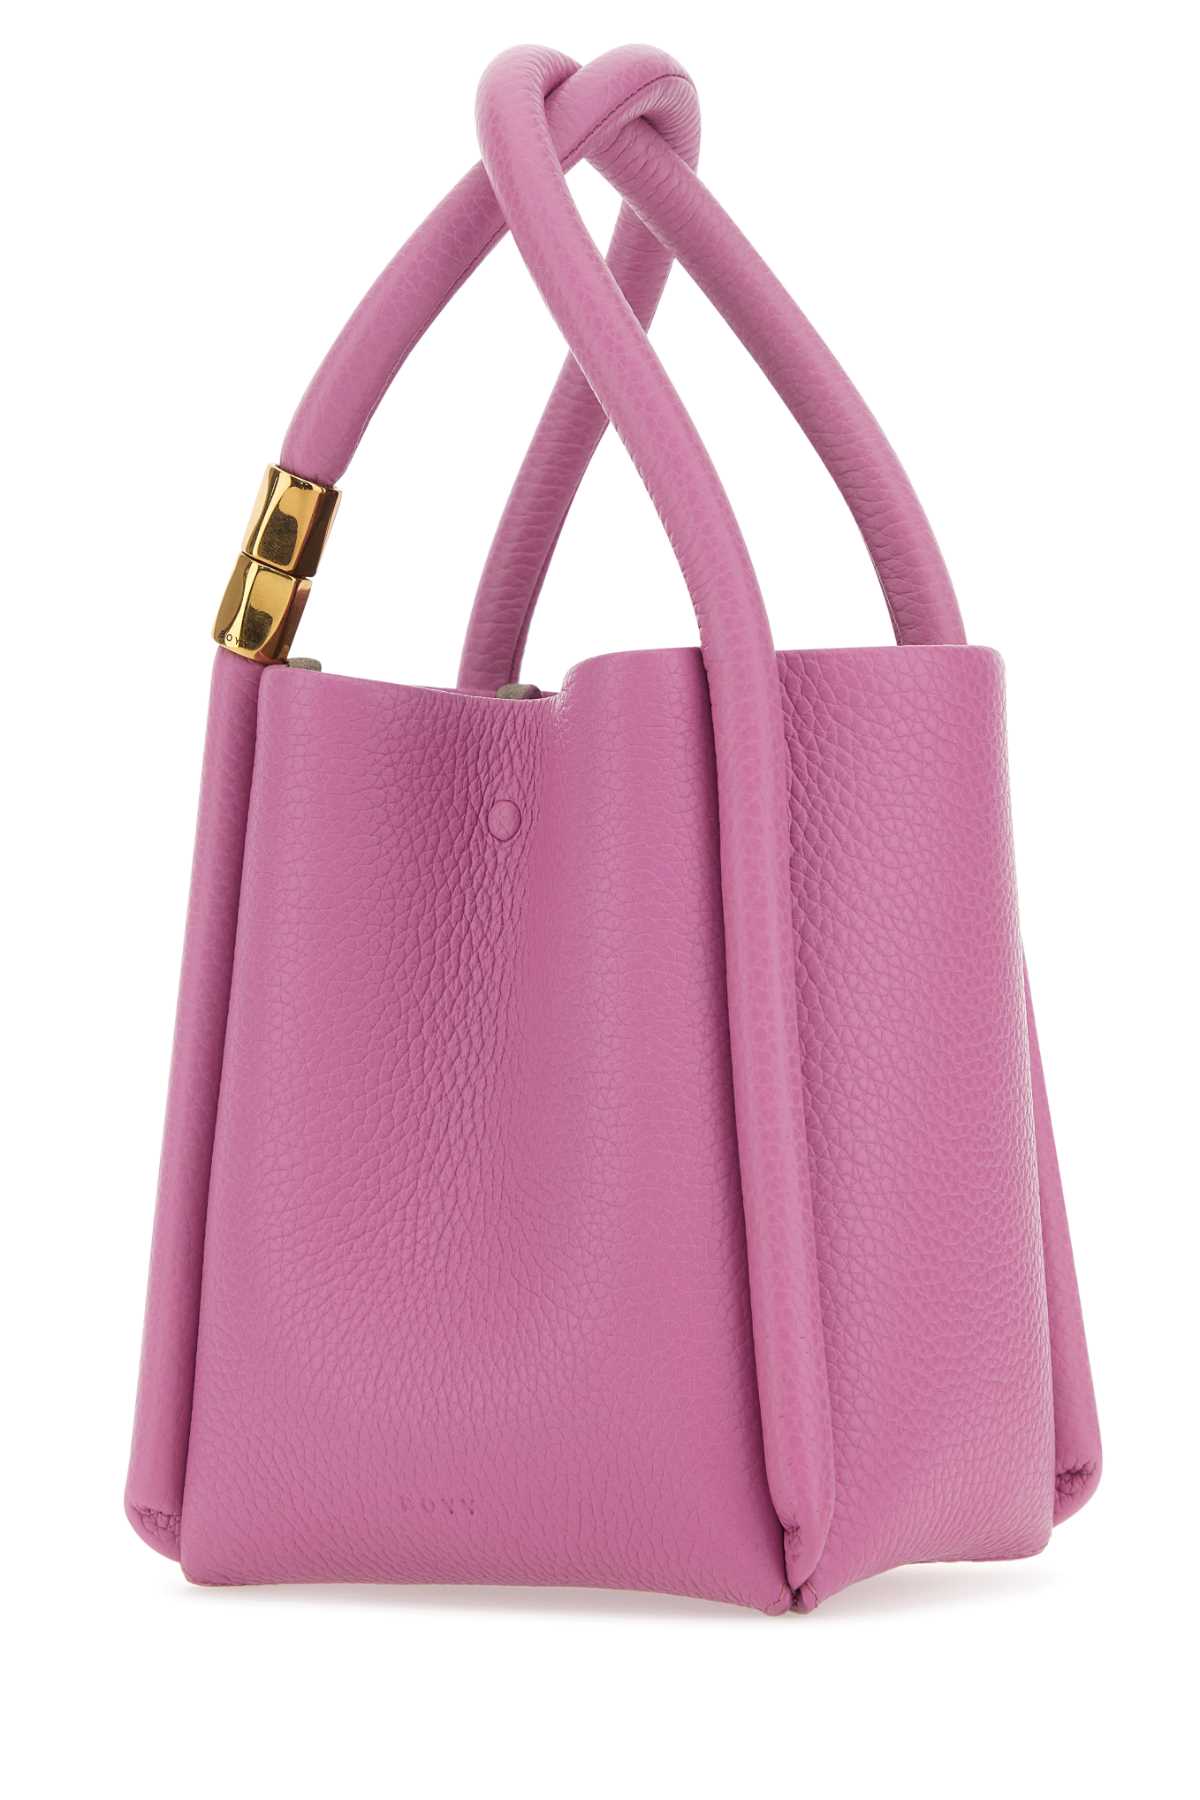 Boyy Dark Pink Leather Lotus 12 Handbag In Putty